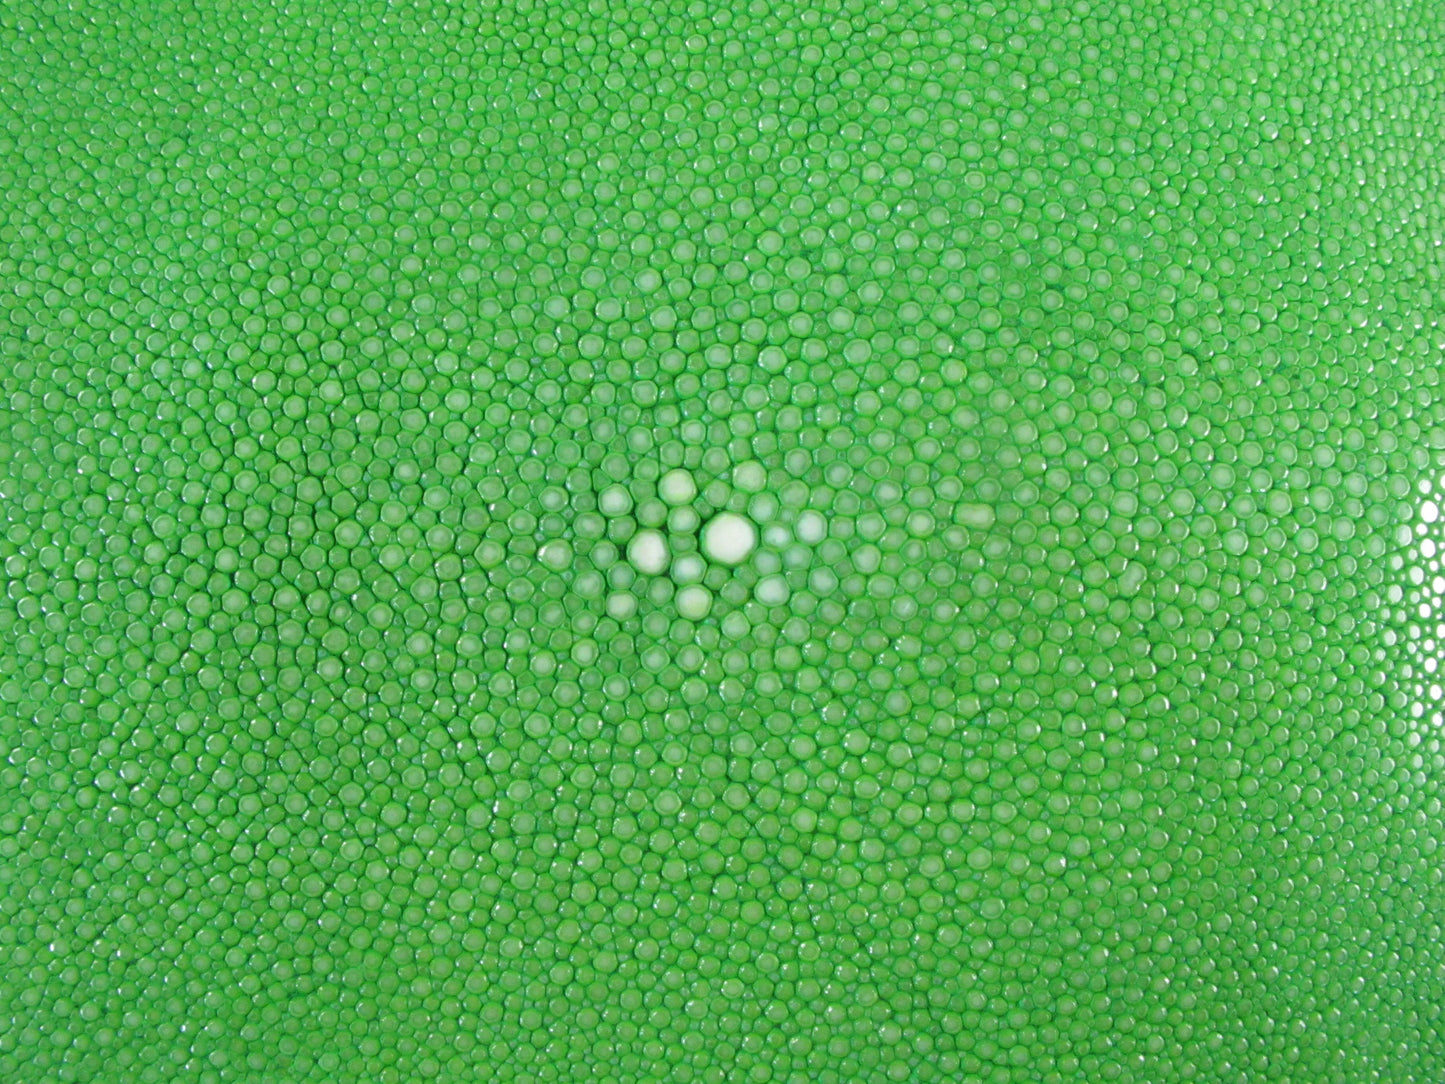 Genuine Polished Stingray Skin Leather Round Shape Hide Pelt Green